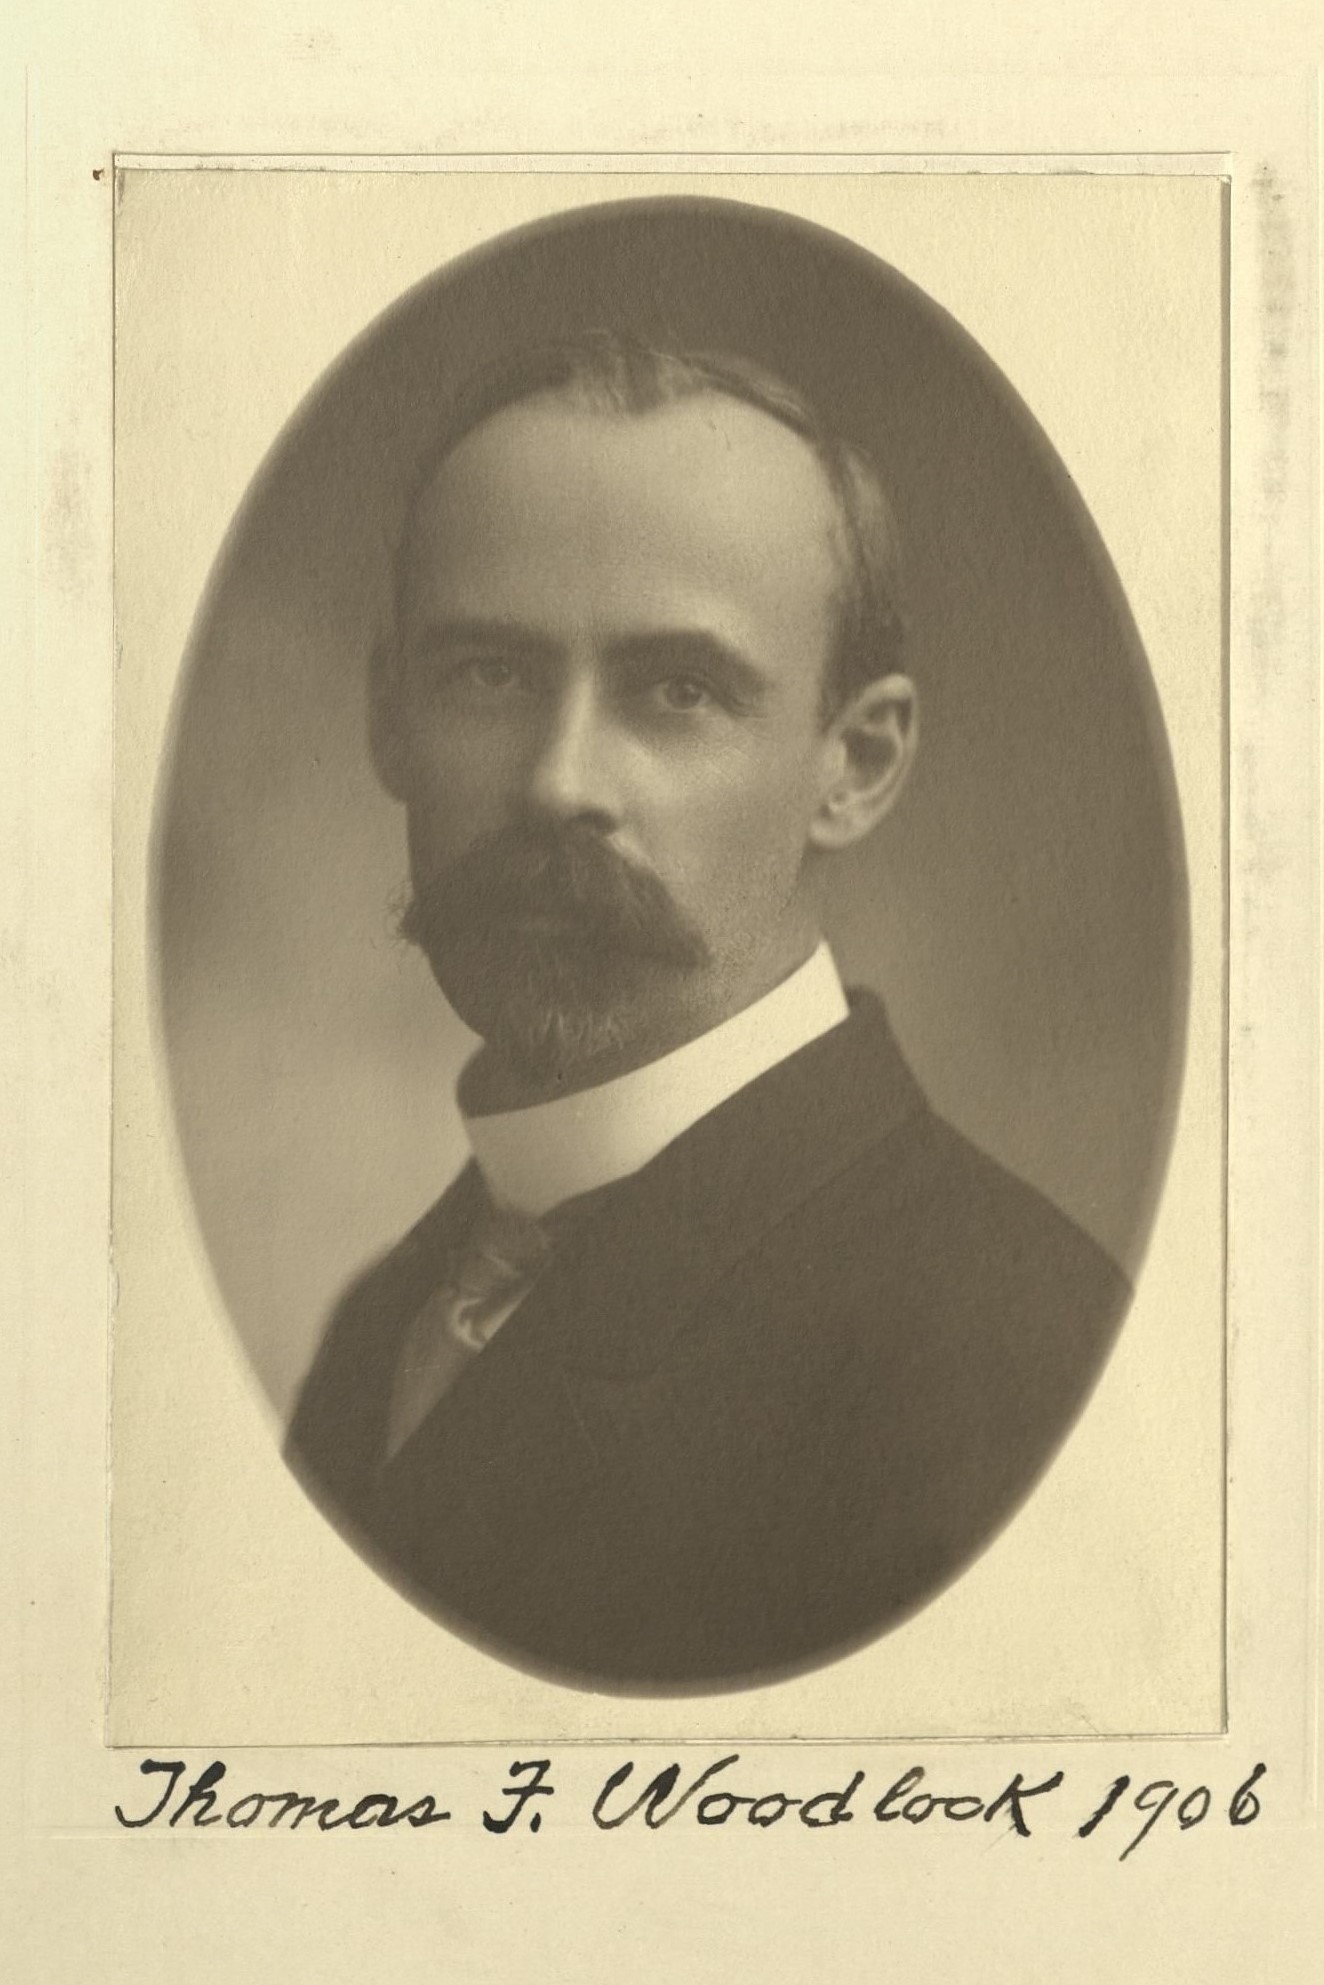 Member portrait of Thomas F. Woodlock